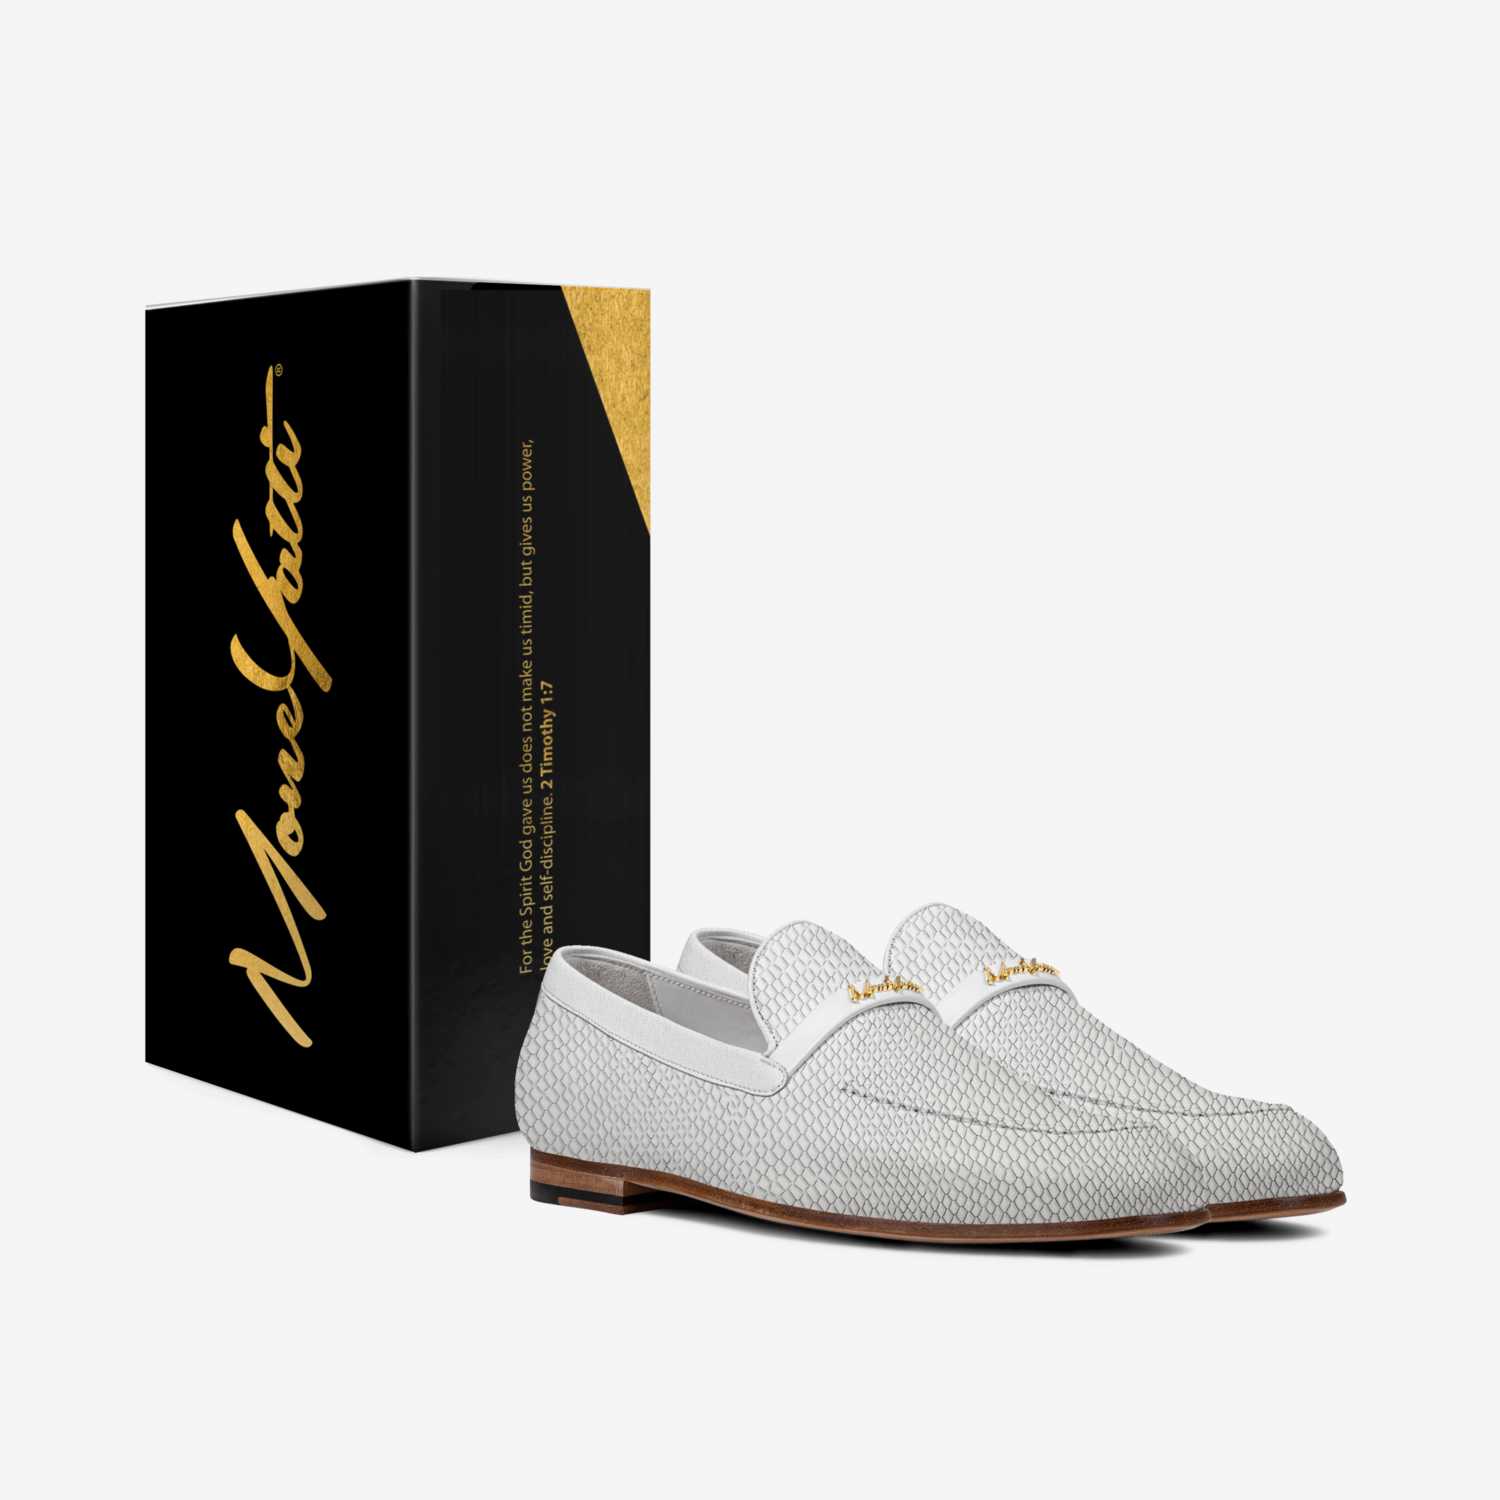 ElegantDrip 008 custom made in Italy shoes by Moneyatti Brand | Box view